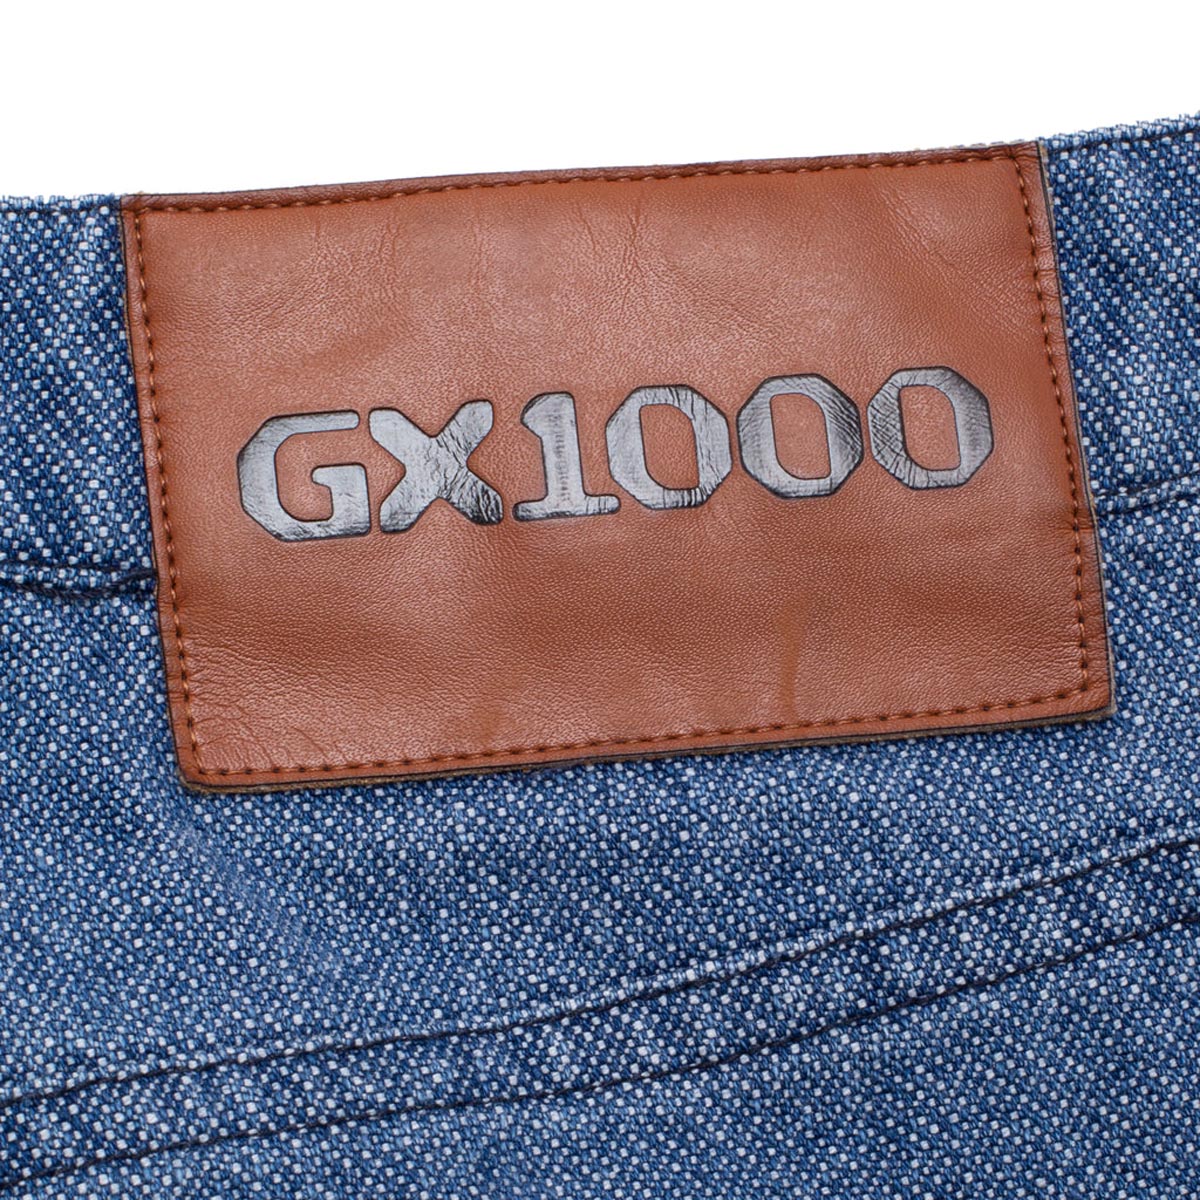 GX1000 Baggy Pants - Washed Blue image 5